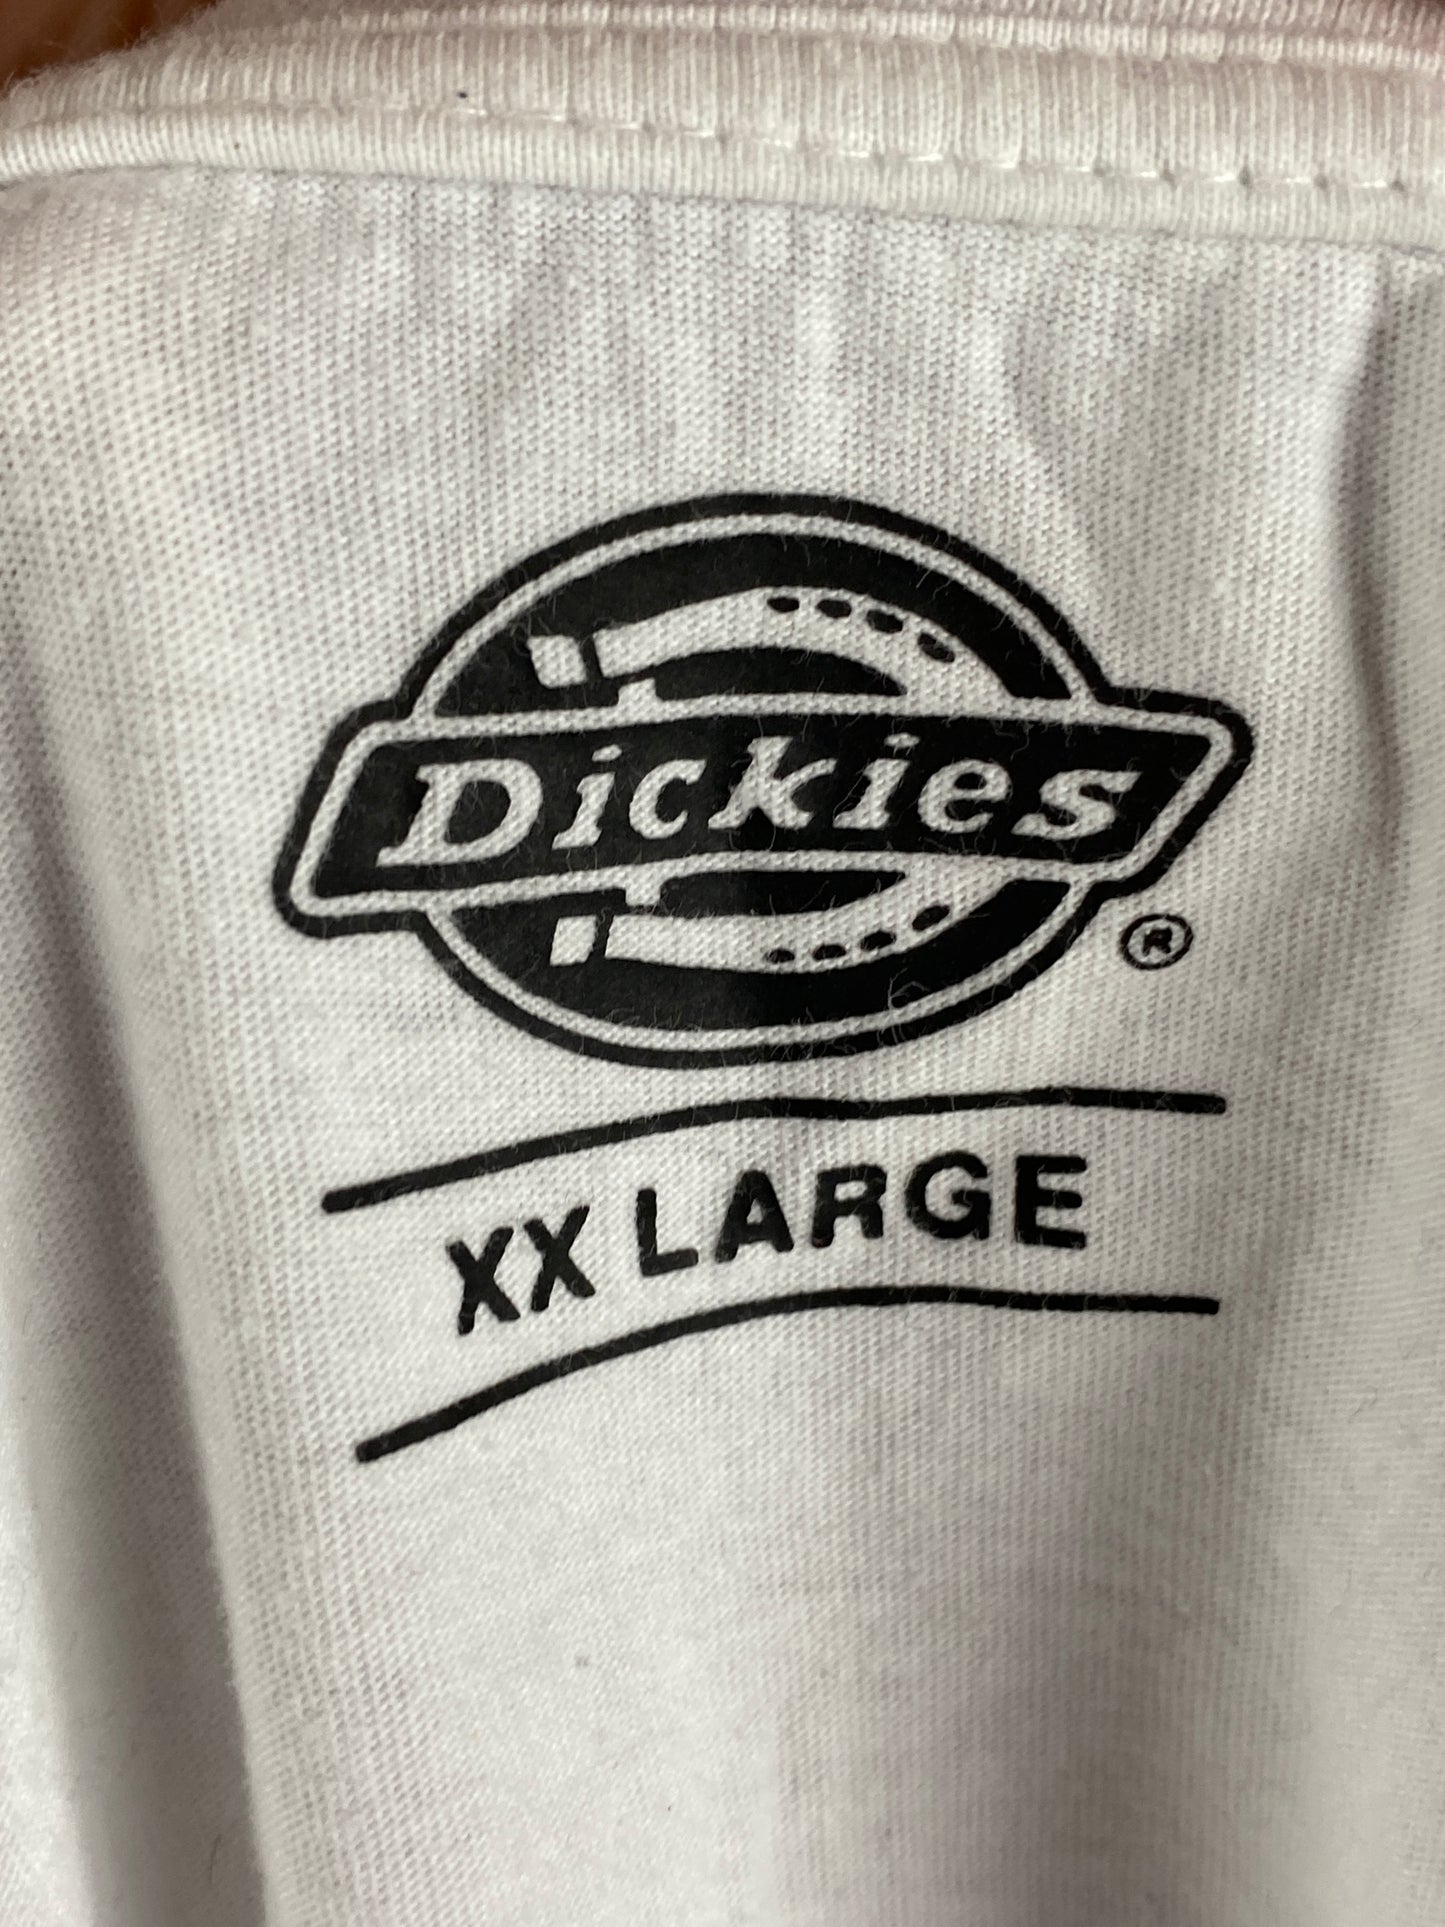 Dickes Vintage Men's T-Shirt